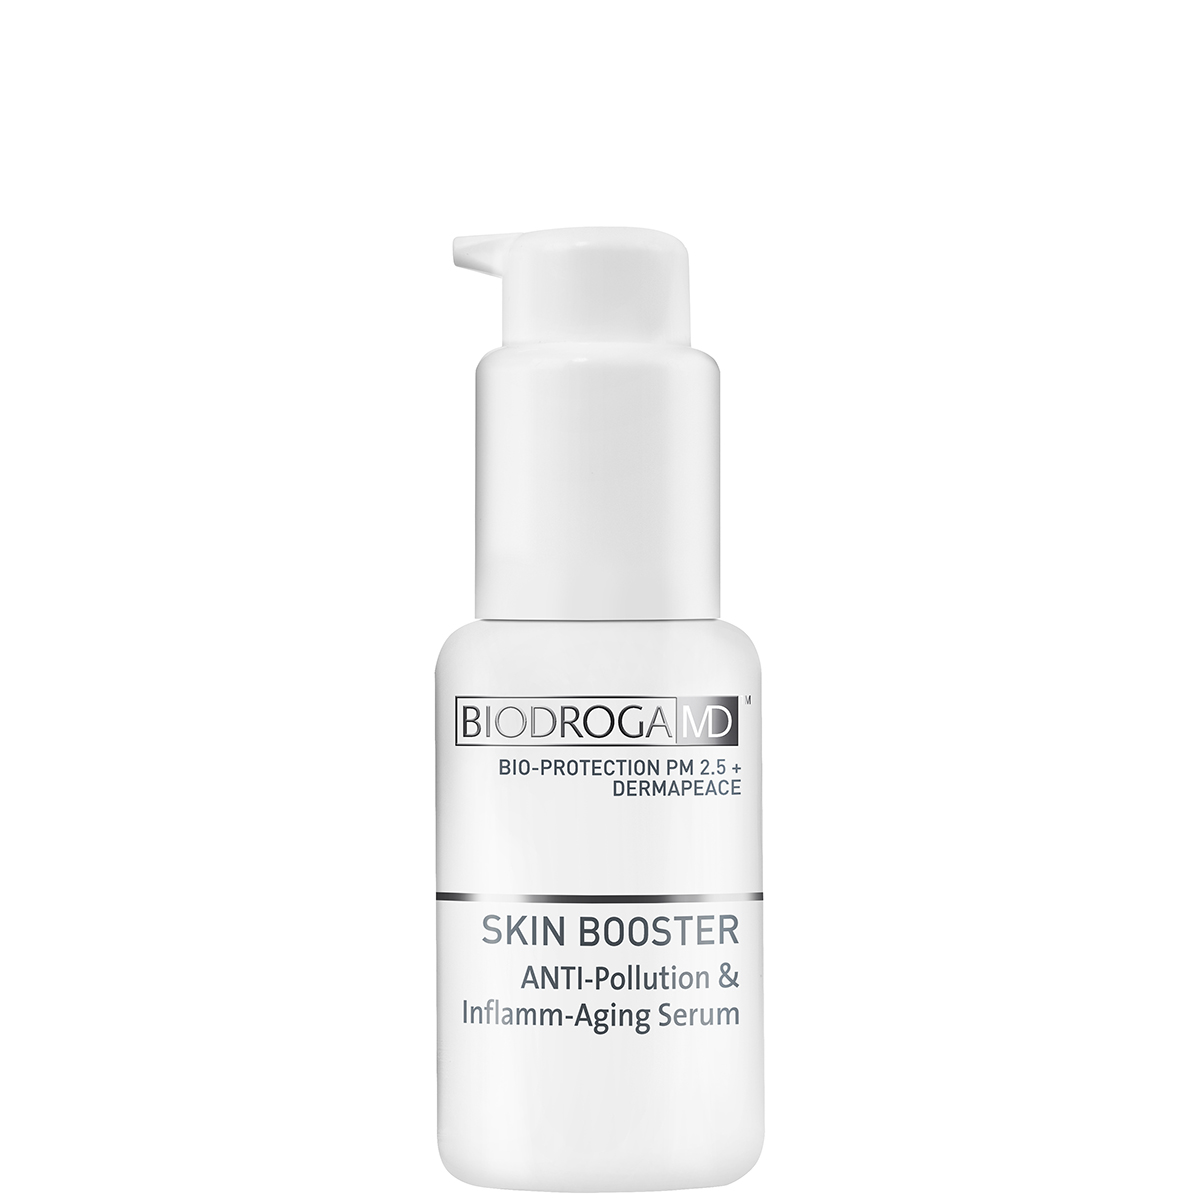 Biodroga MD Skin Booster Anti-Pollution & Inflamm-Aging Serum